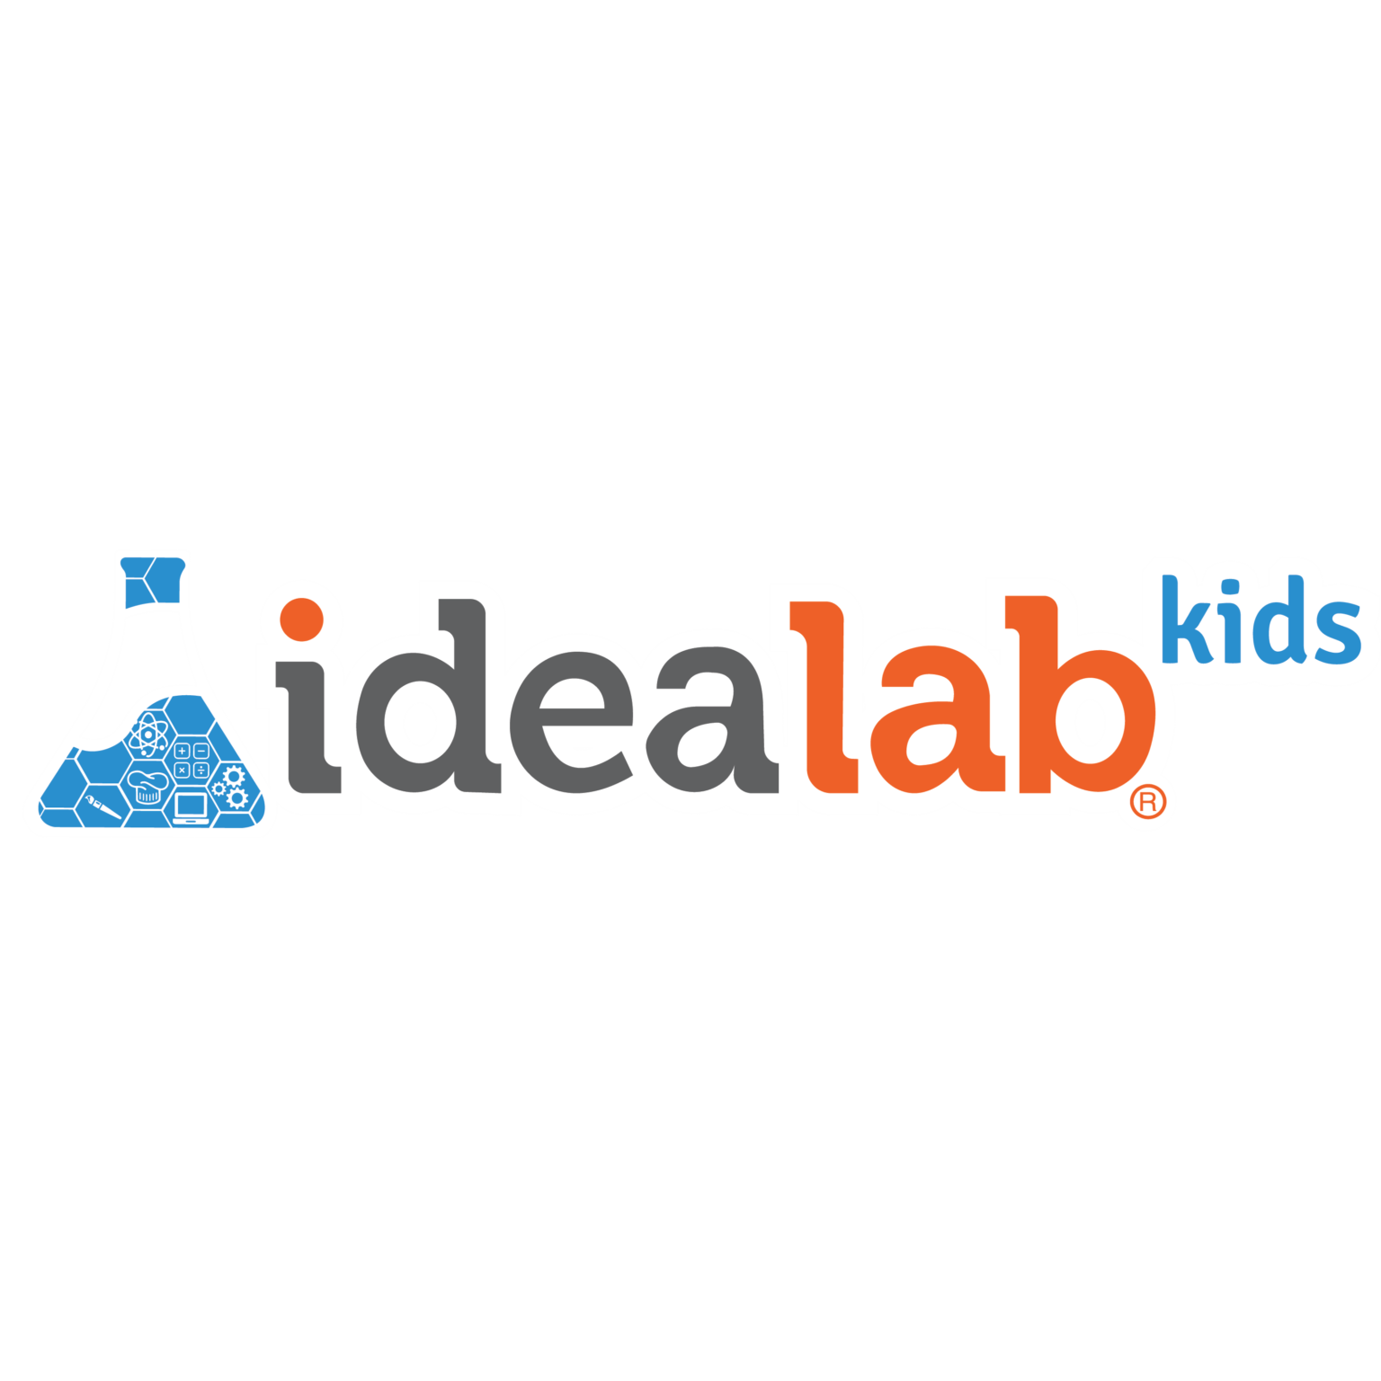 Idea Lab logo